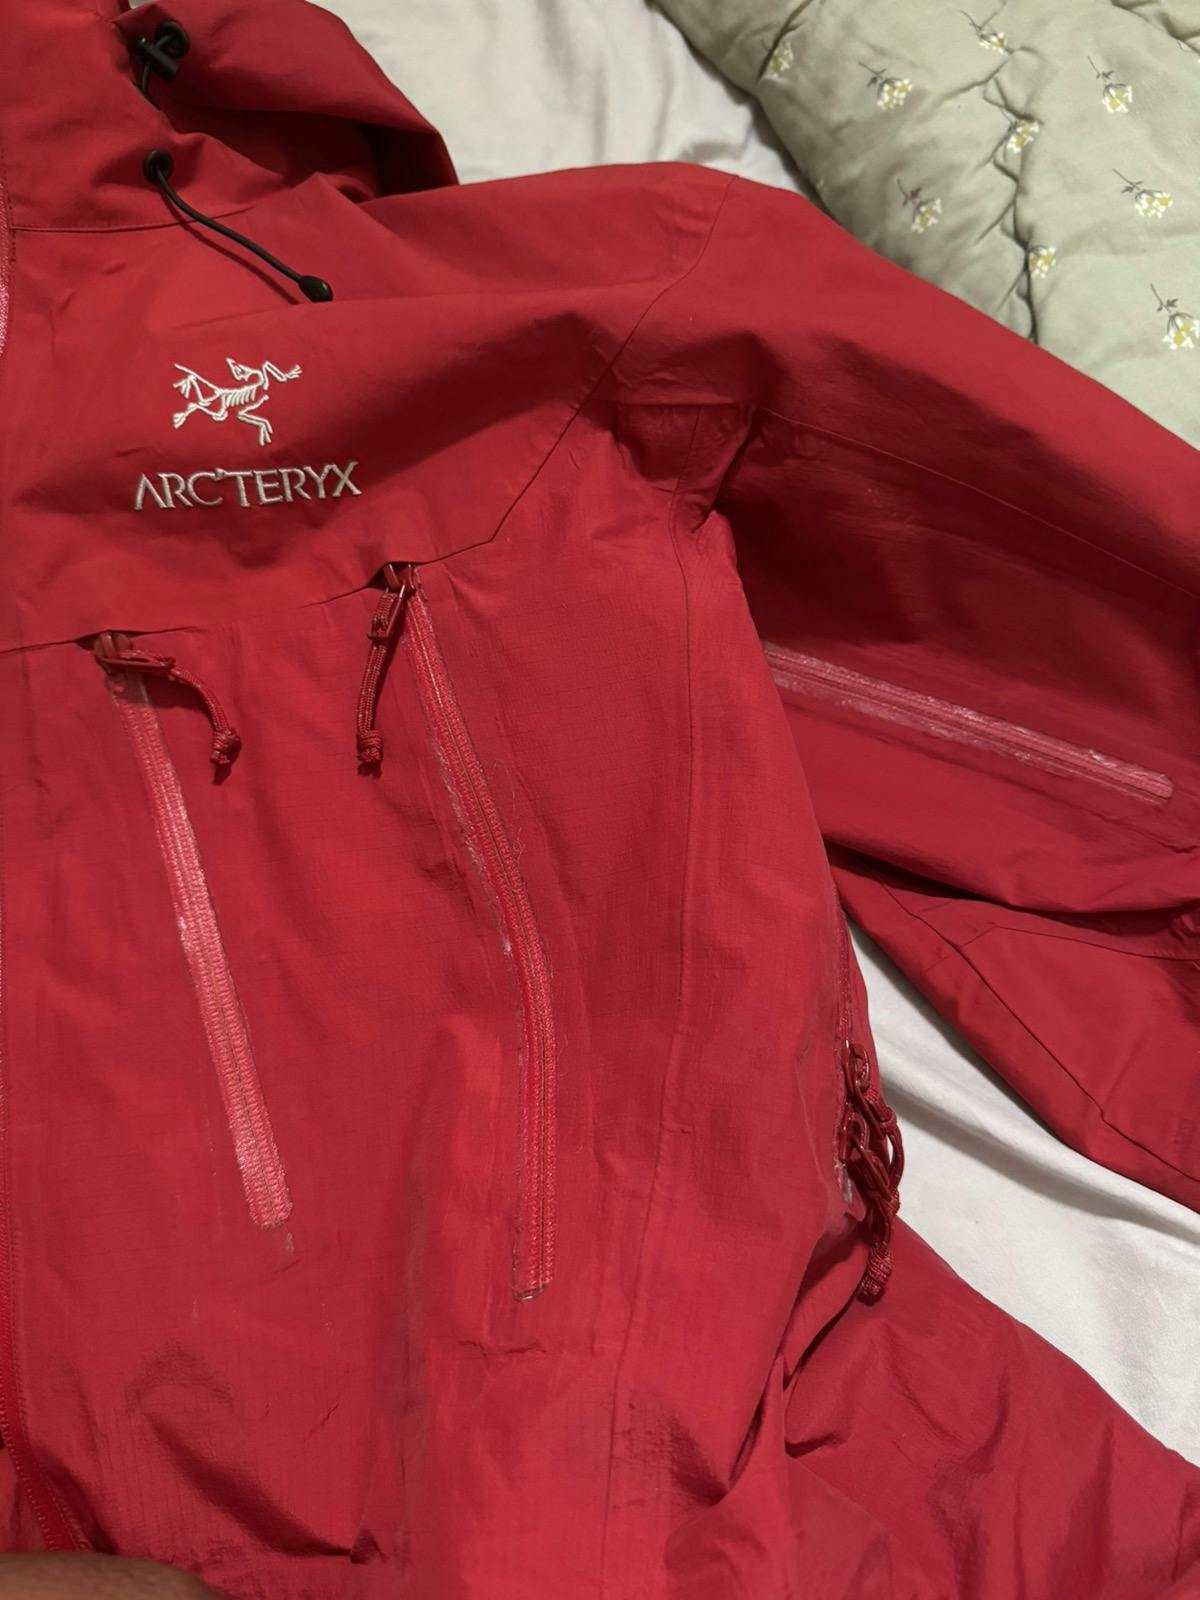 Arcteryx Theta AR Goretex Jacket Apple Red Made in Canada - 12